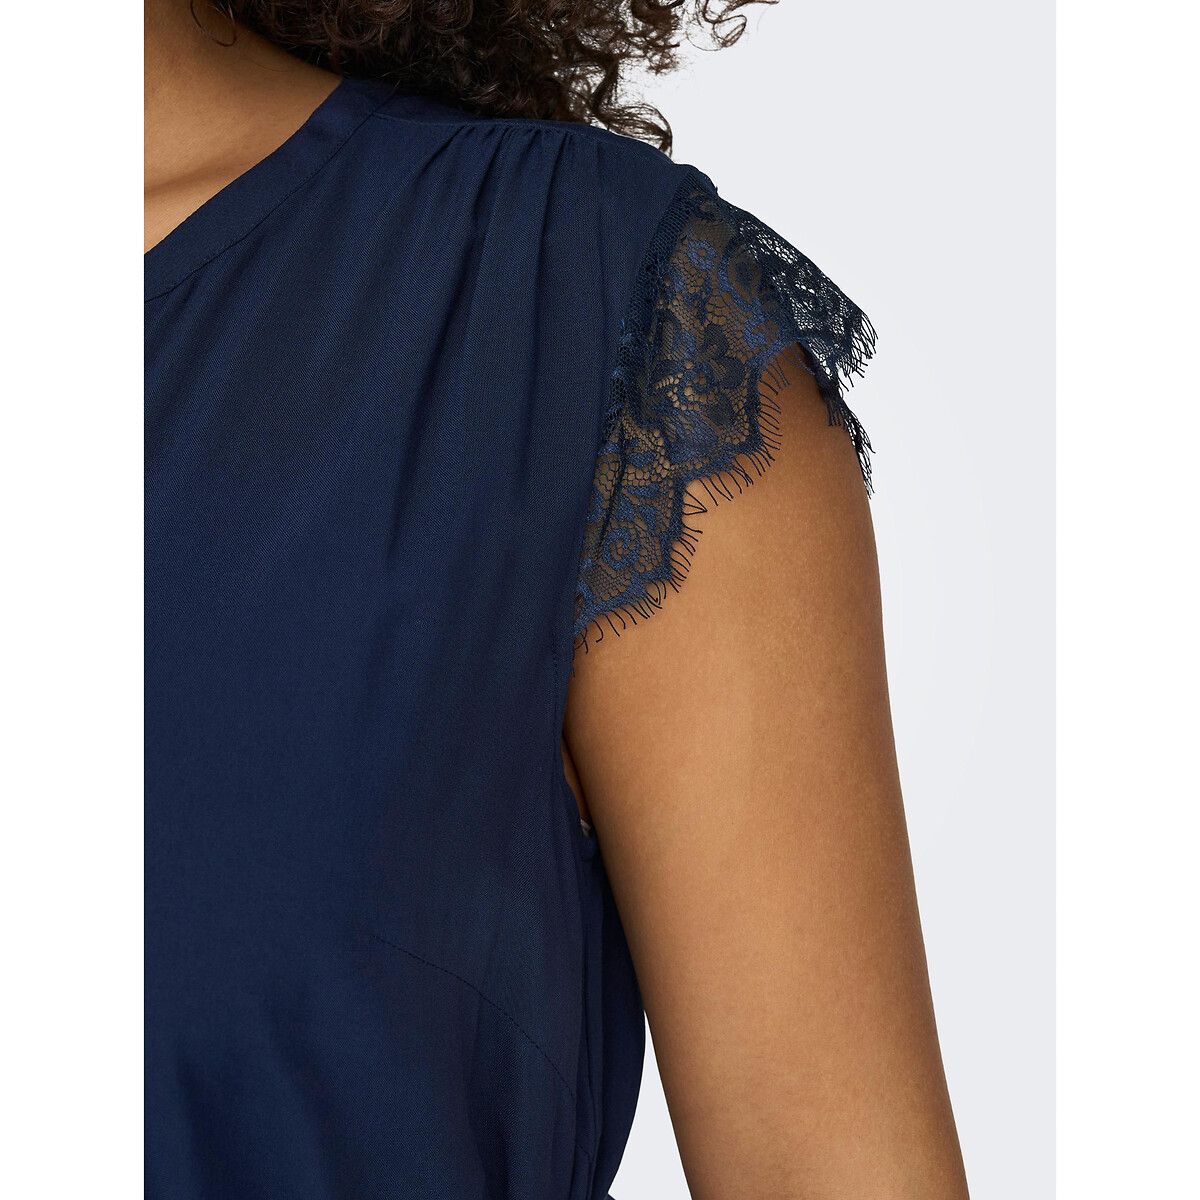 Платье Короткое с завязками 58 синий LaRedoute, размер 58 - фото 4